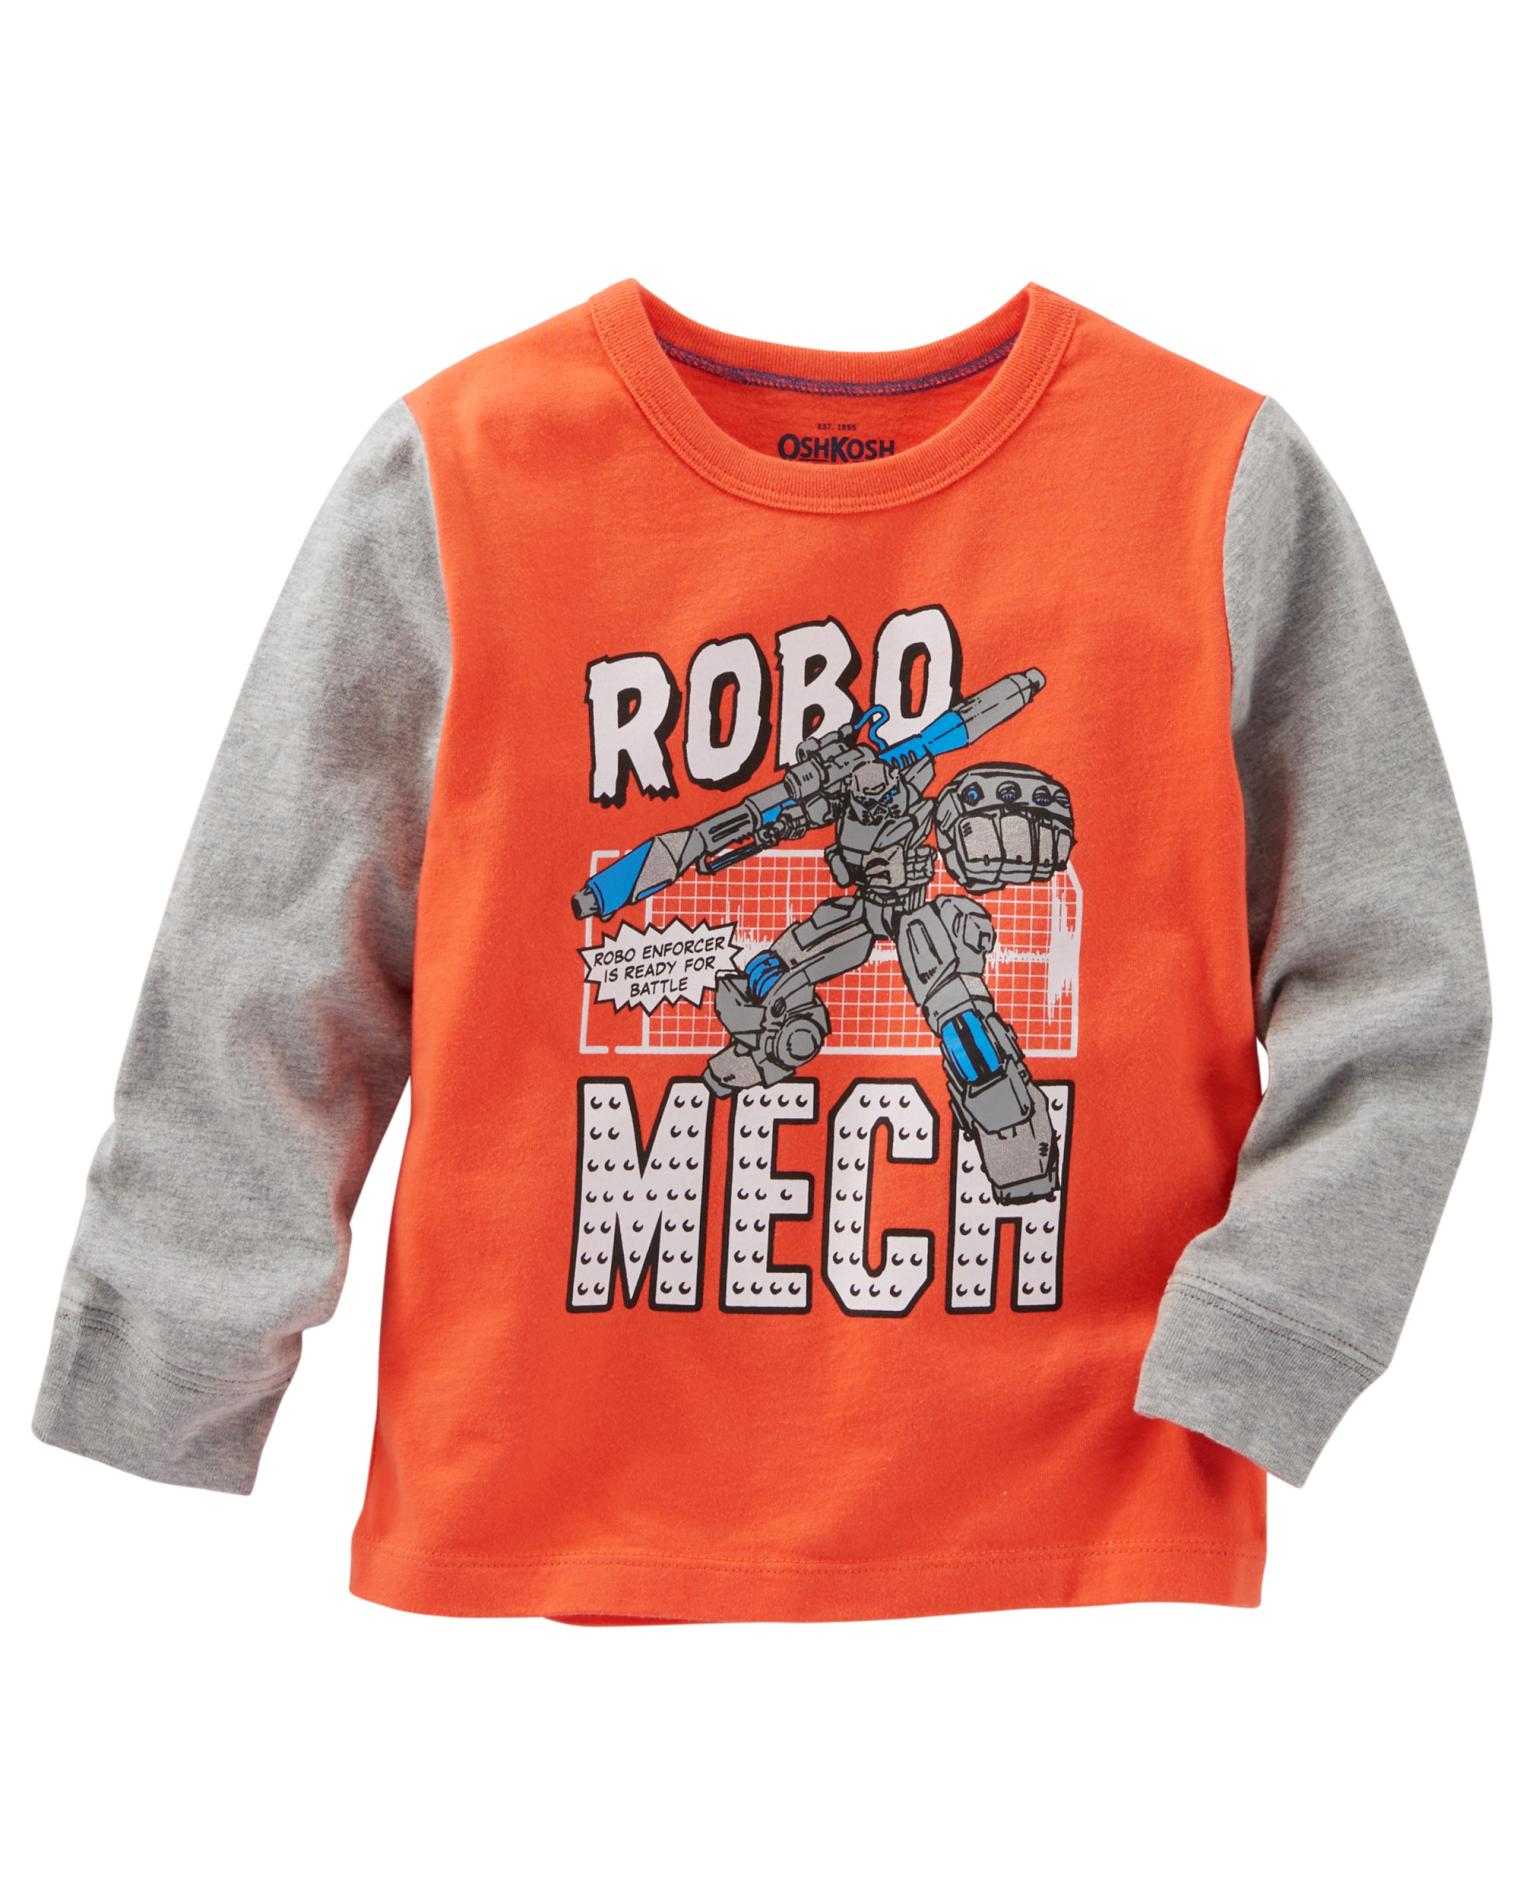 OshKosh Boys' Graphic T-Shirt - Robo Mech